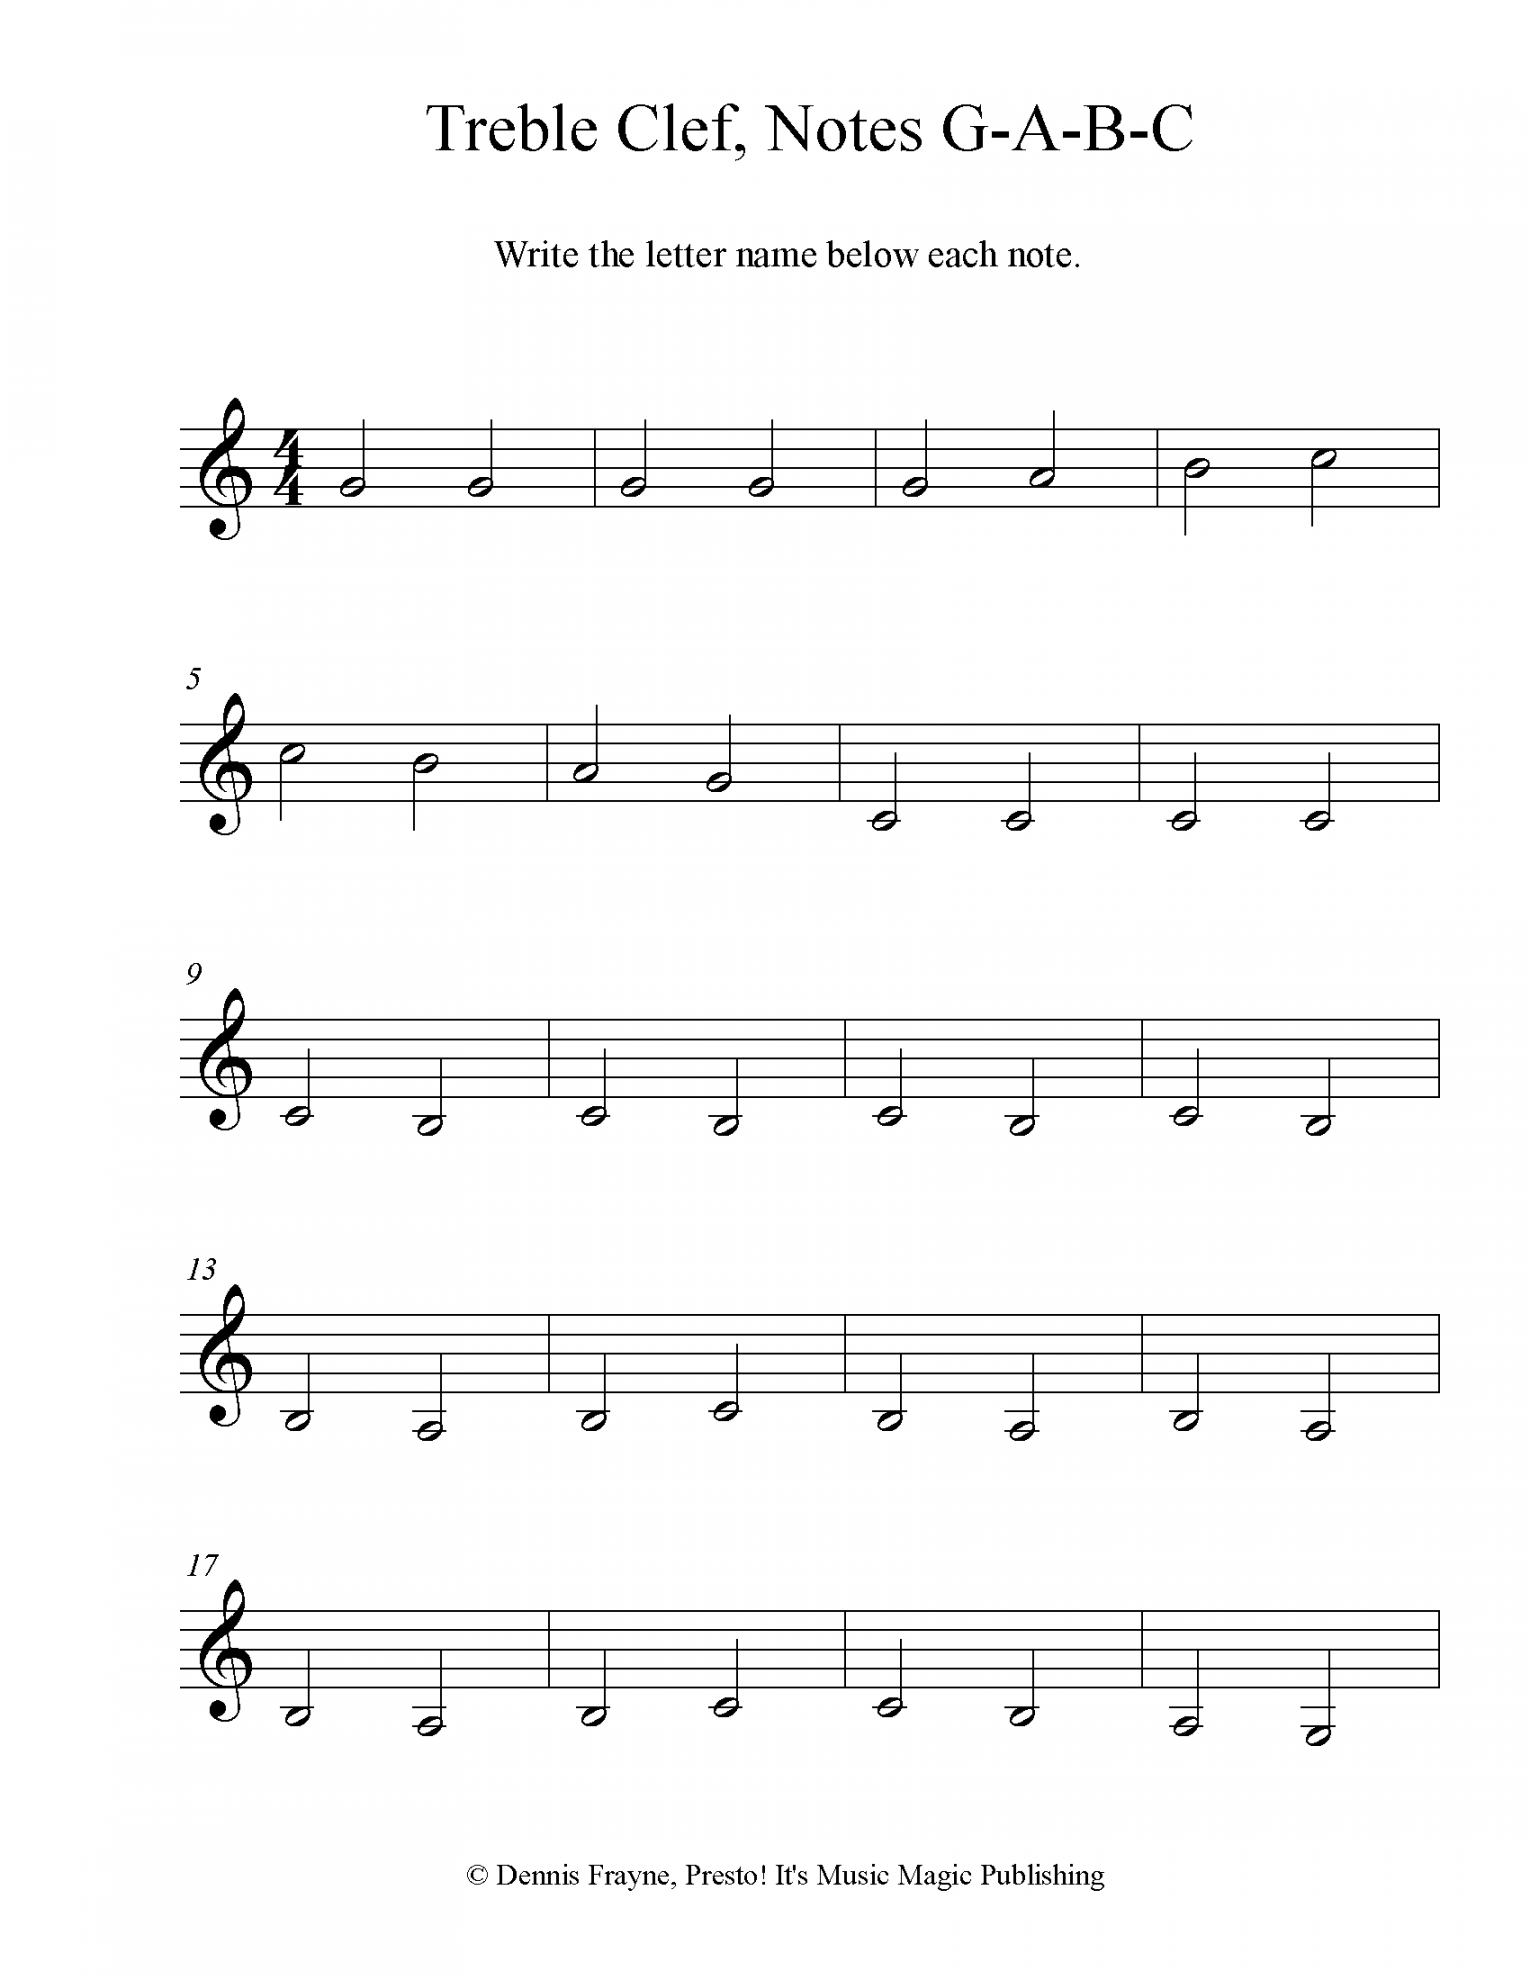 Free Printable Piano Sheet Music For Beginners With Letters - Printable - FREE! Printable Music Note Naming Worksheets — Presto! It